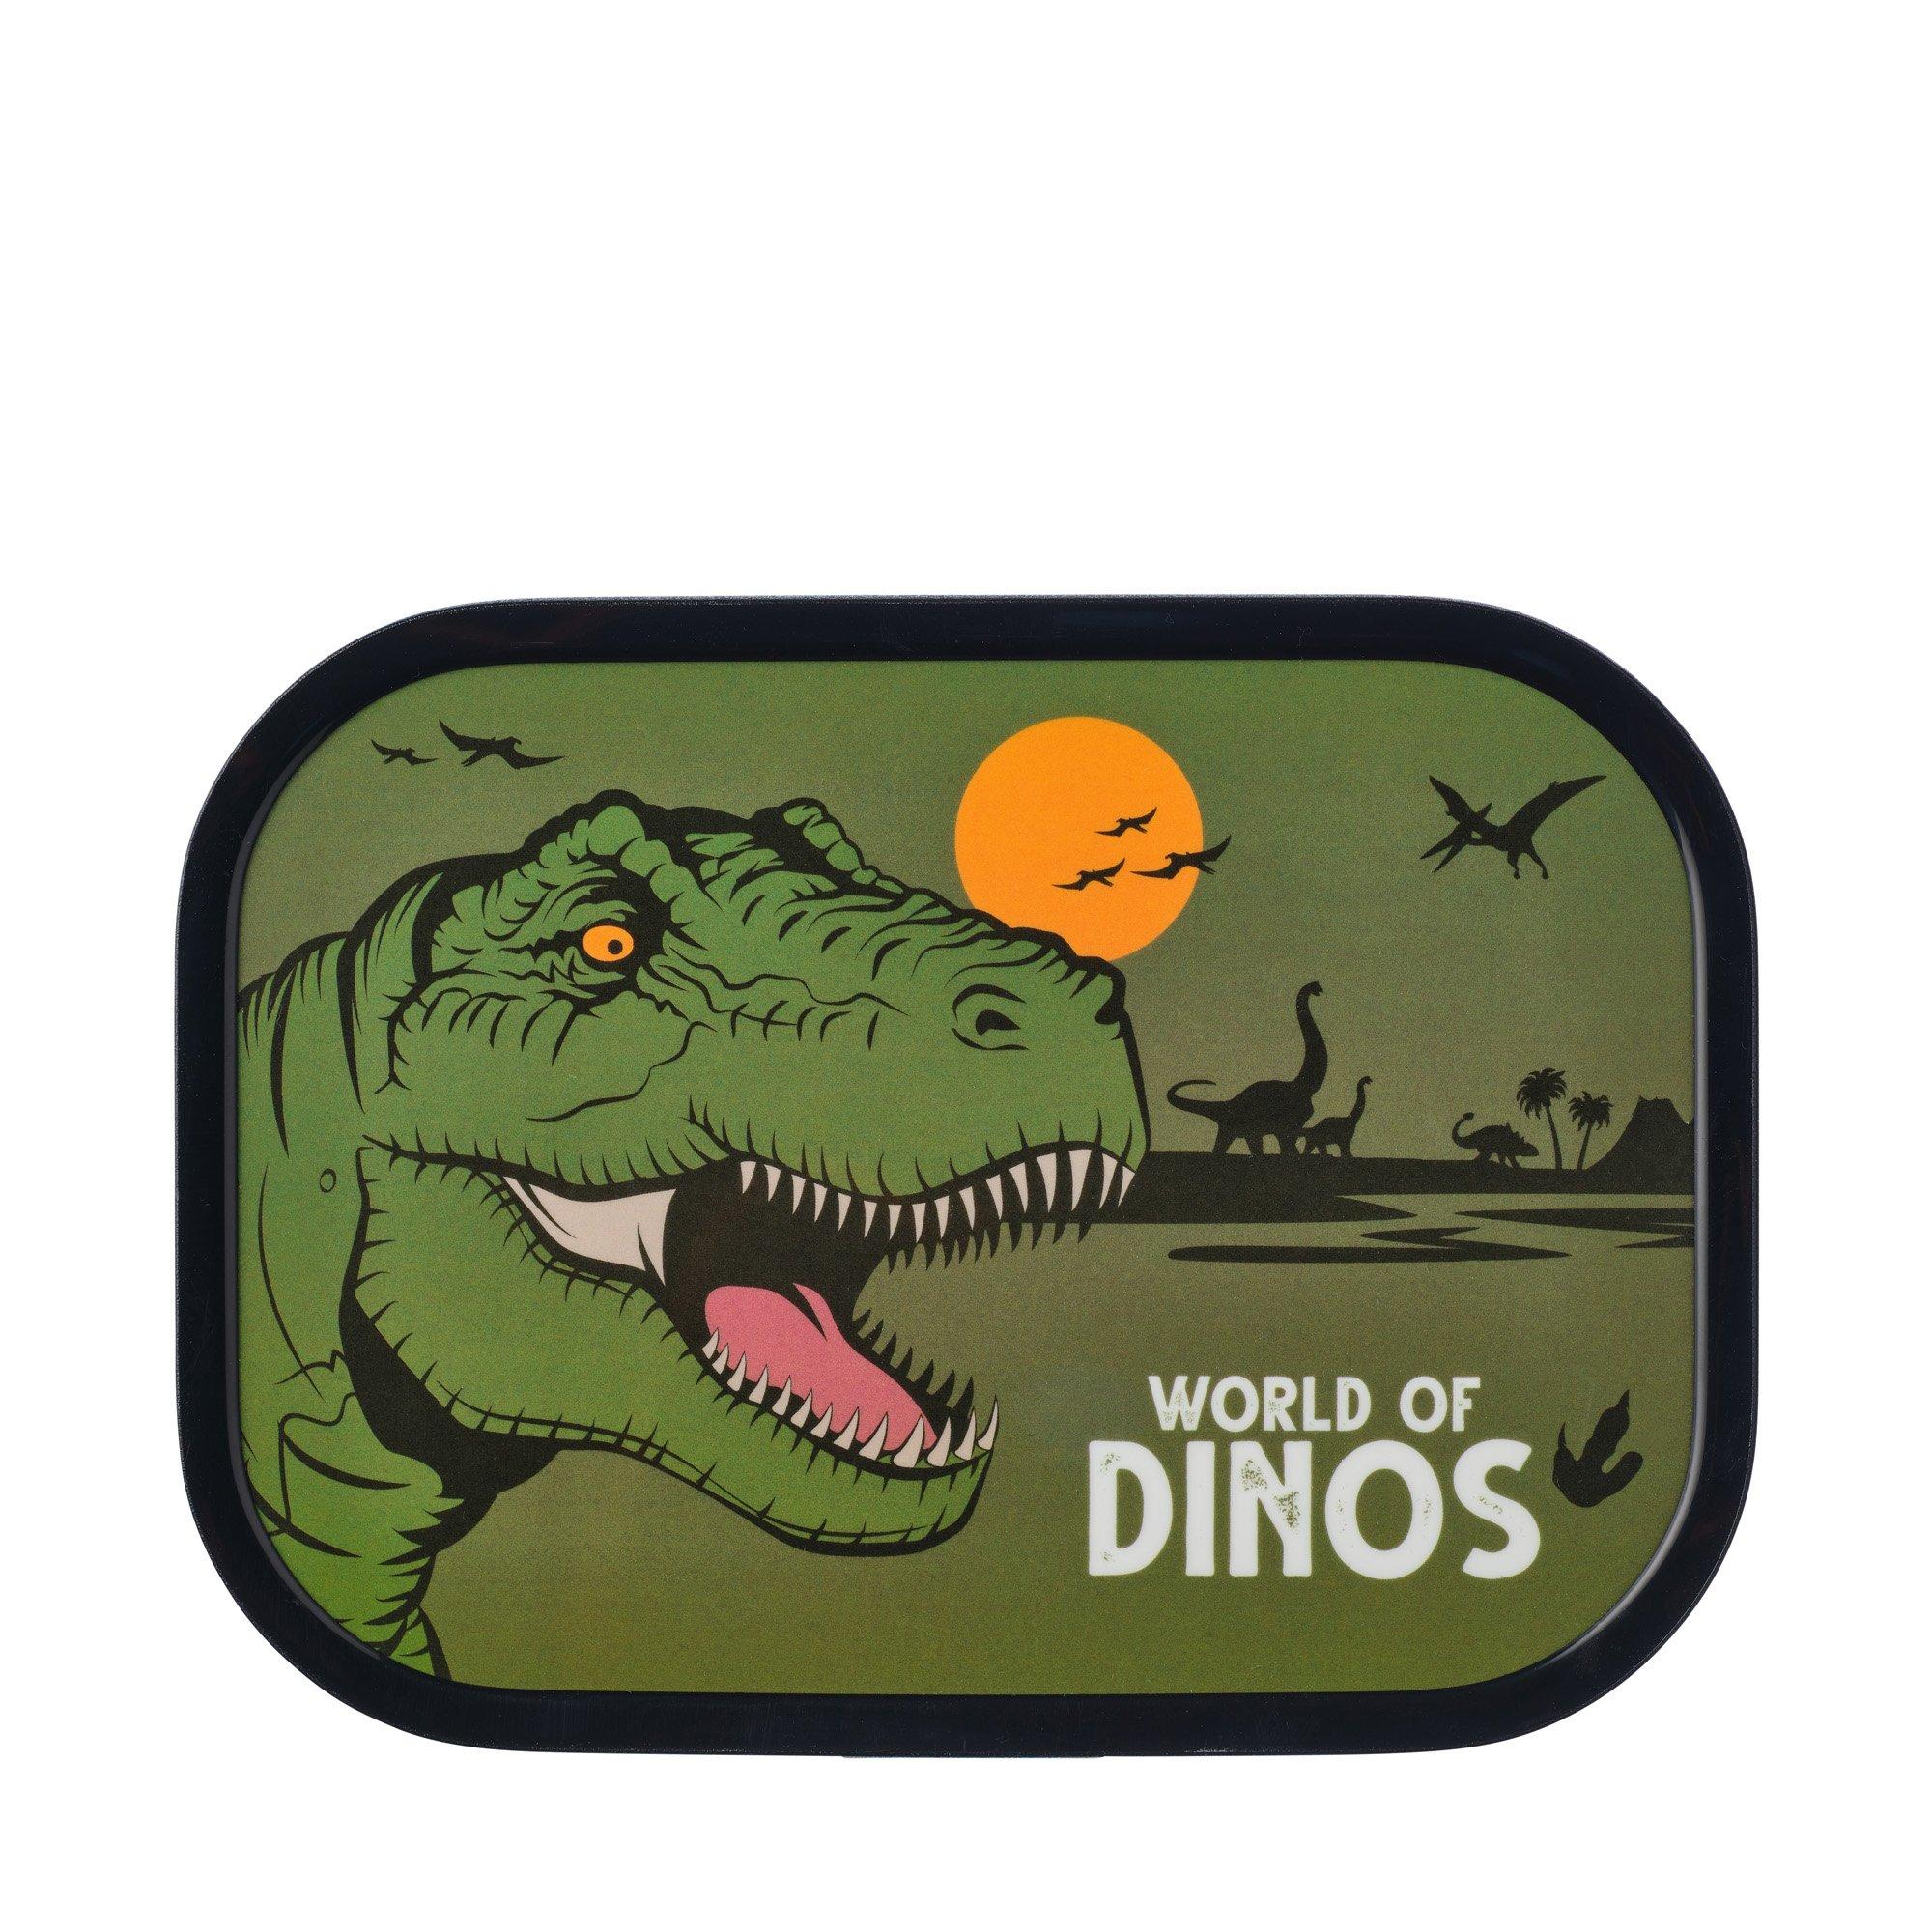 Mepal Lunchbox Dino 